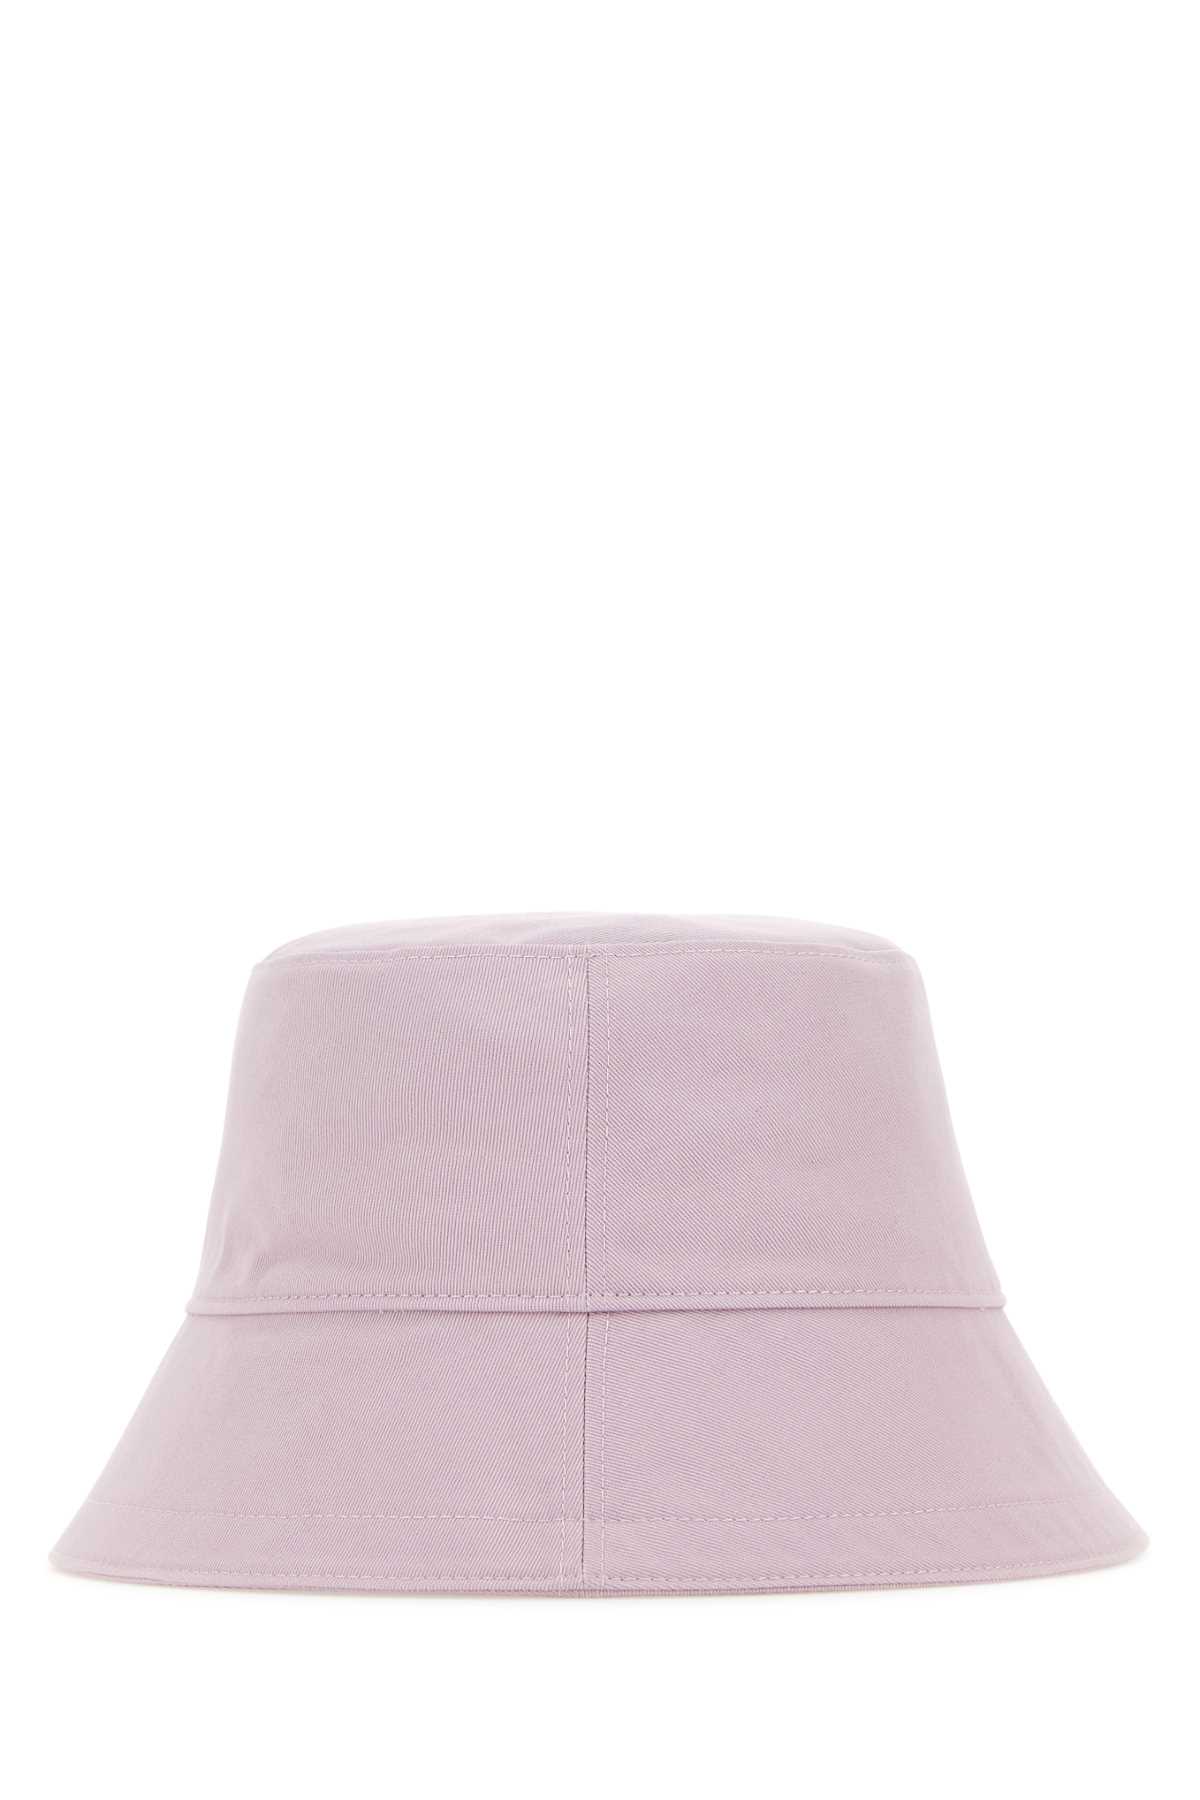 Helen Kaminski Pink Cotton Hat In Lavender